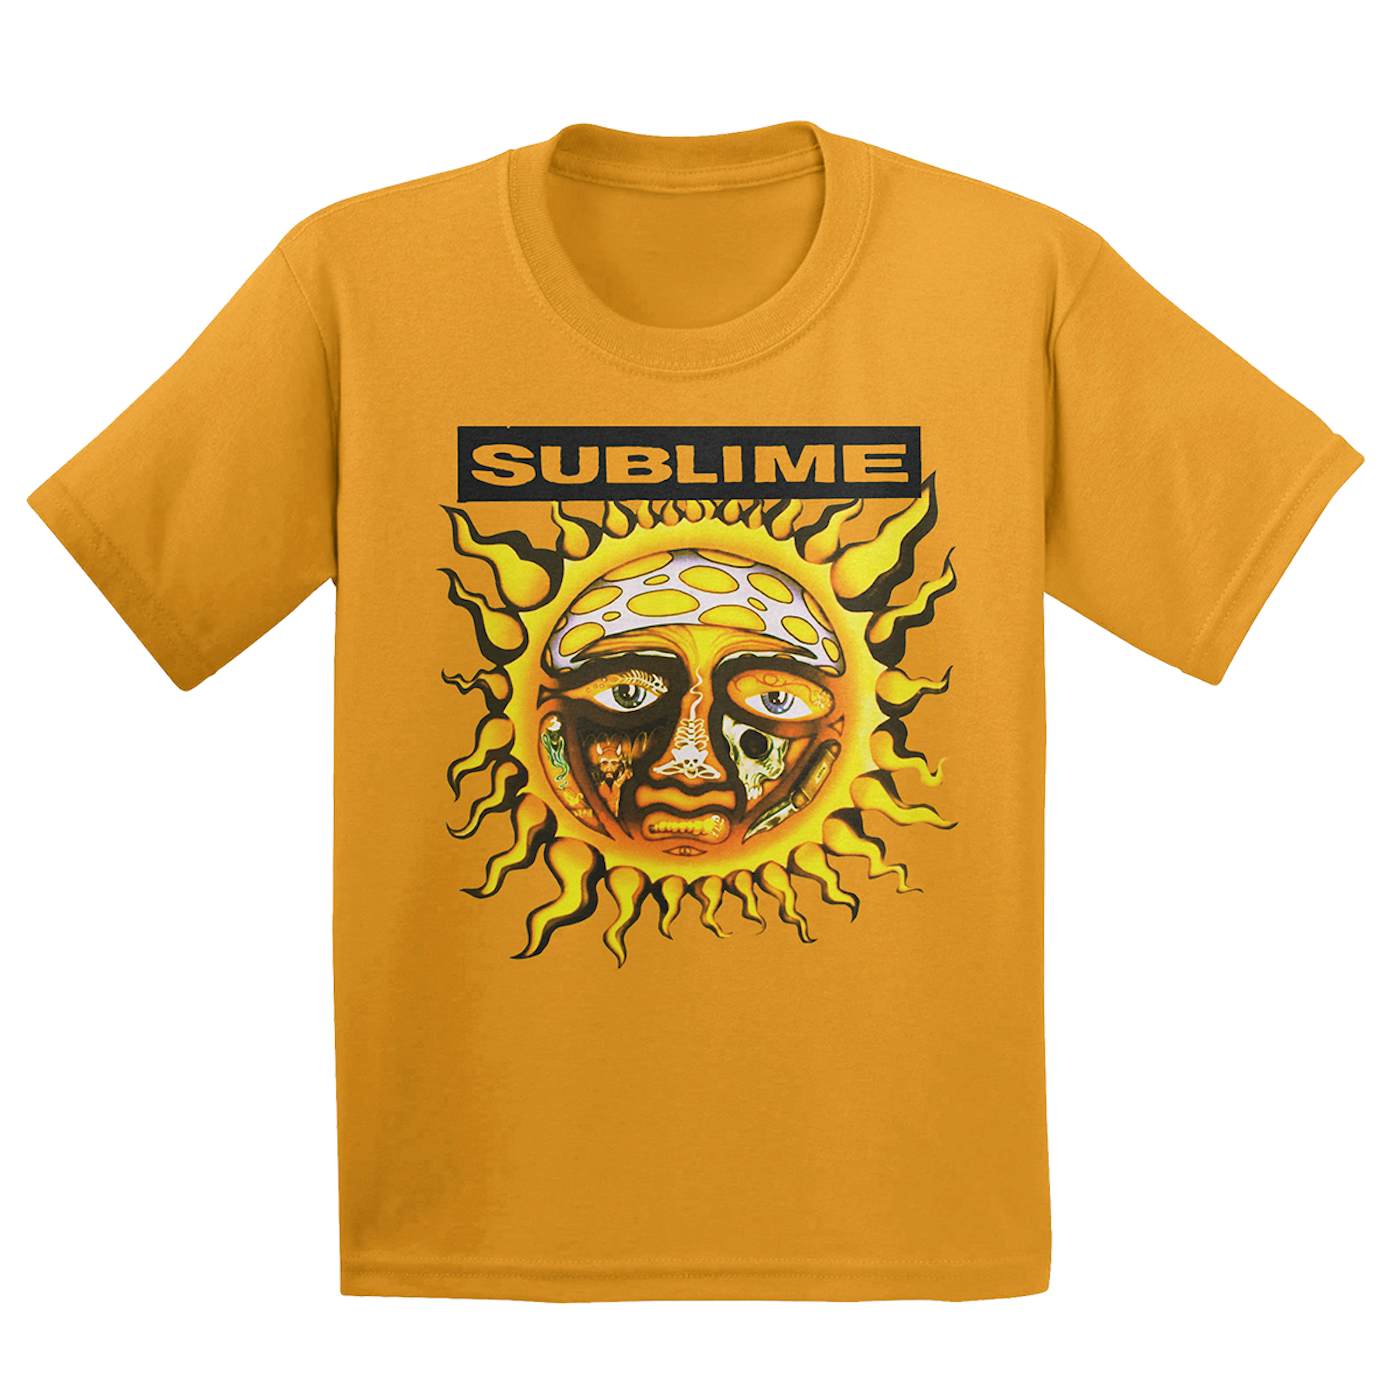 Sublime Sun Orange Youth Tee $19.95